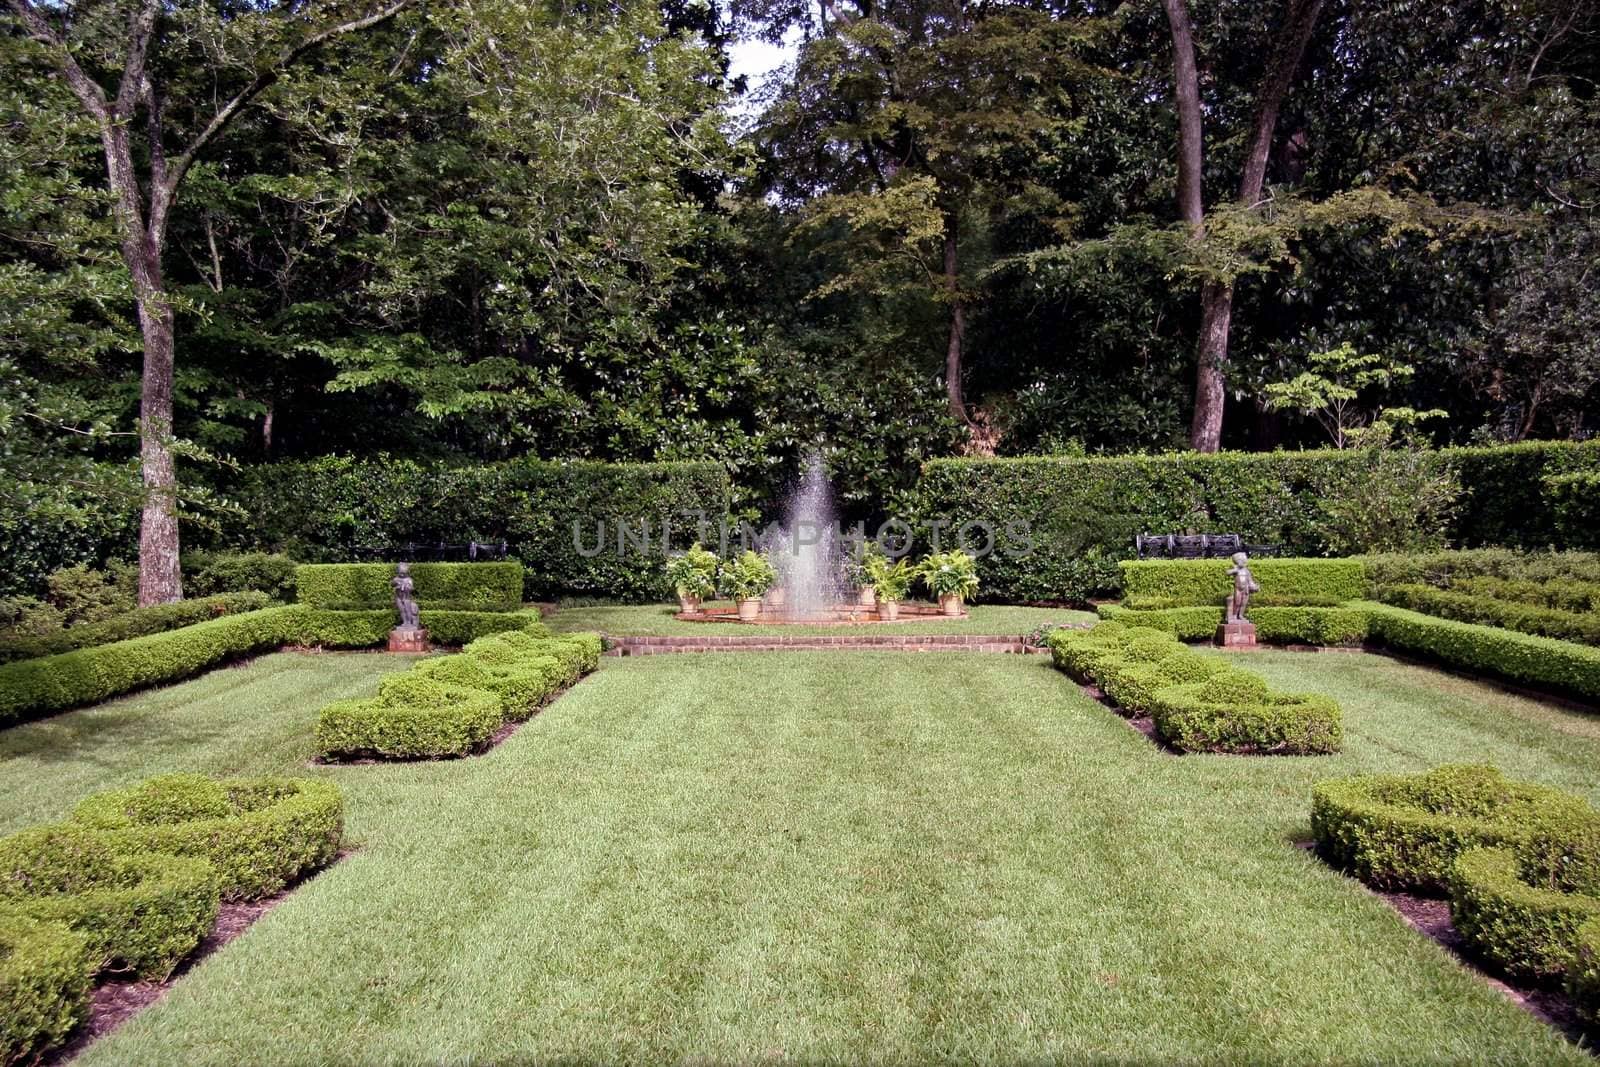 An english garden with a fountain spraying in the center